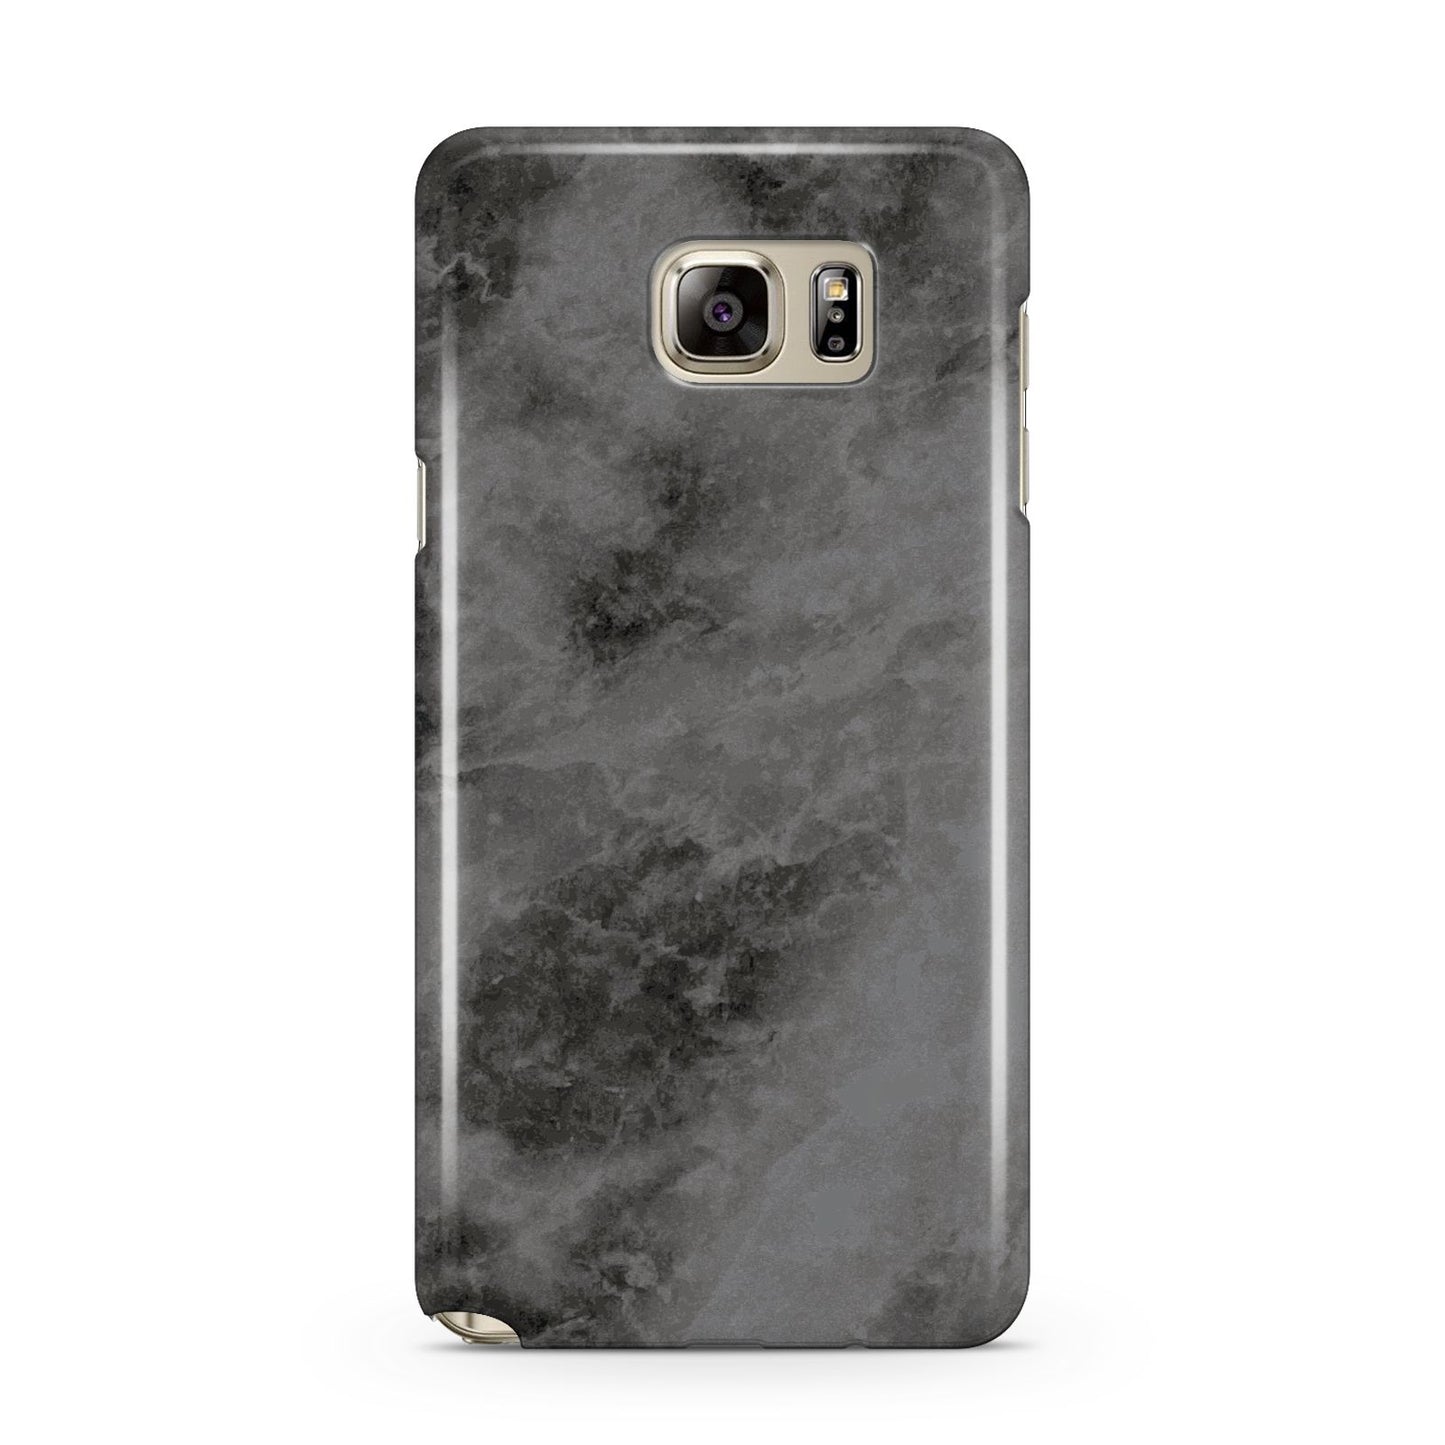 Faux Marble Grey Black Samsung Galaxy Note 5 Case